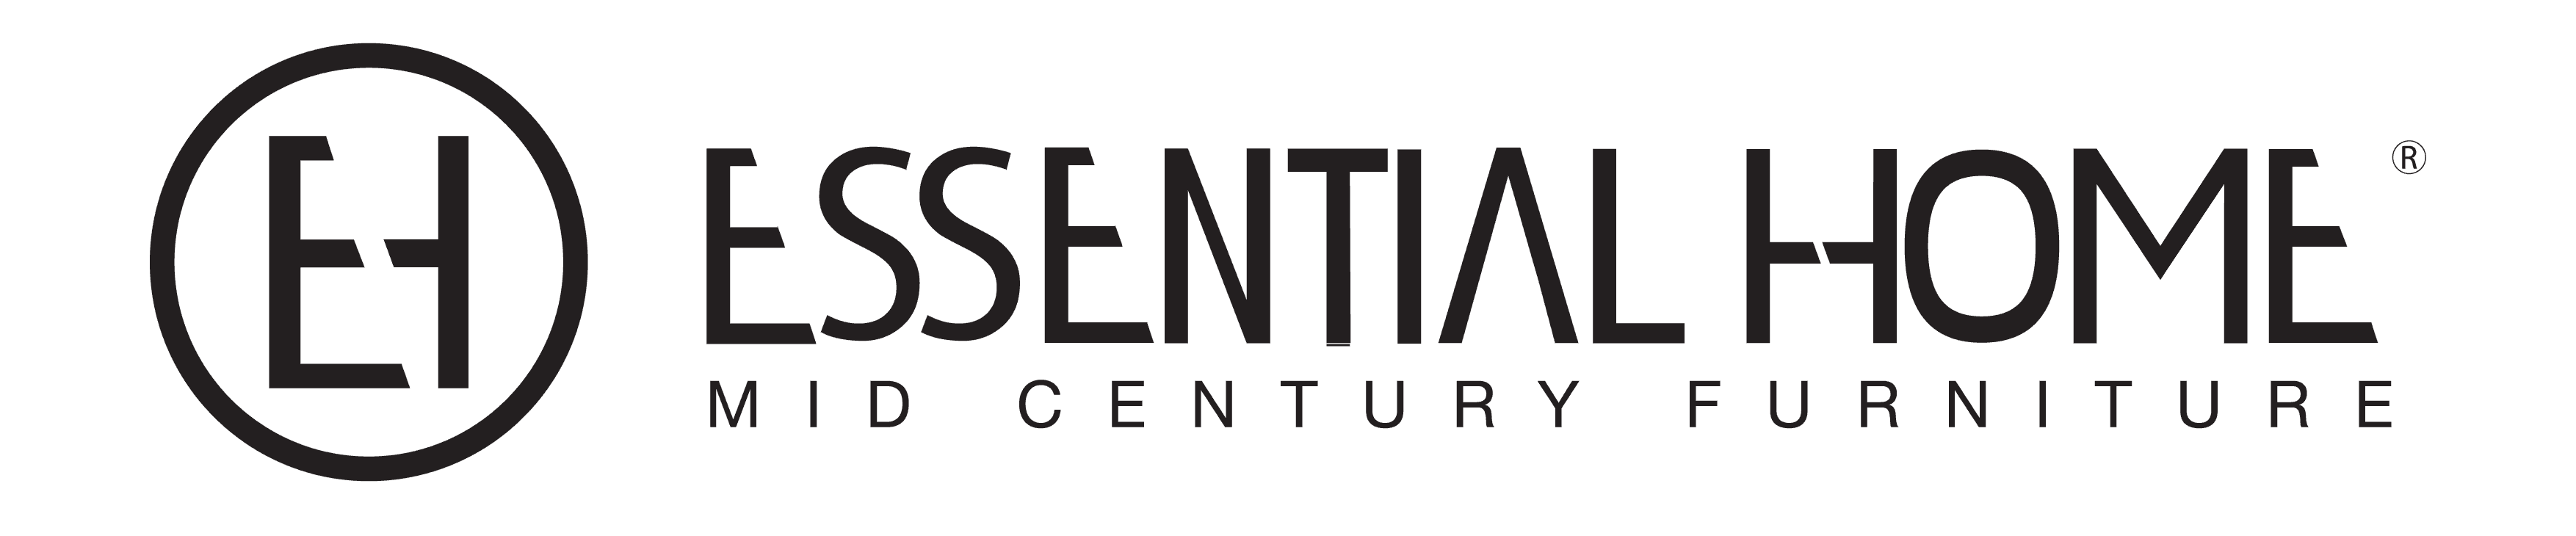 Century Furniture Logo - Samples of Essential Home. Mid Century Furniture